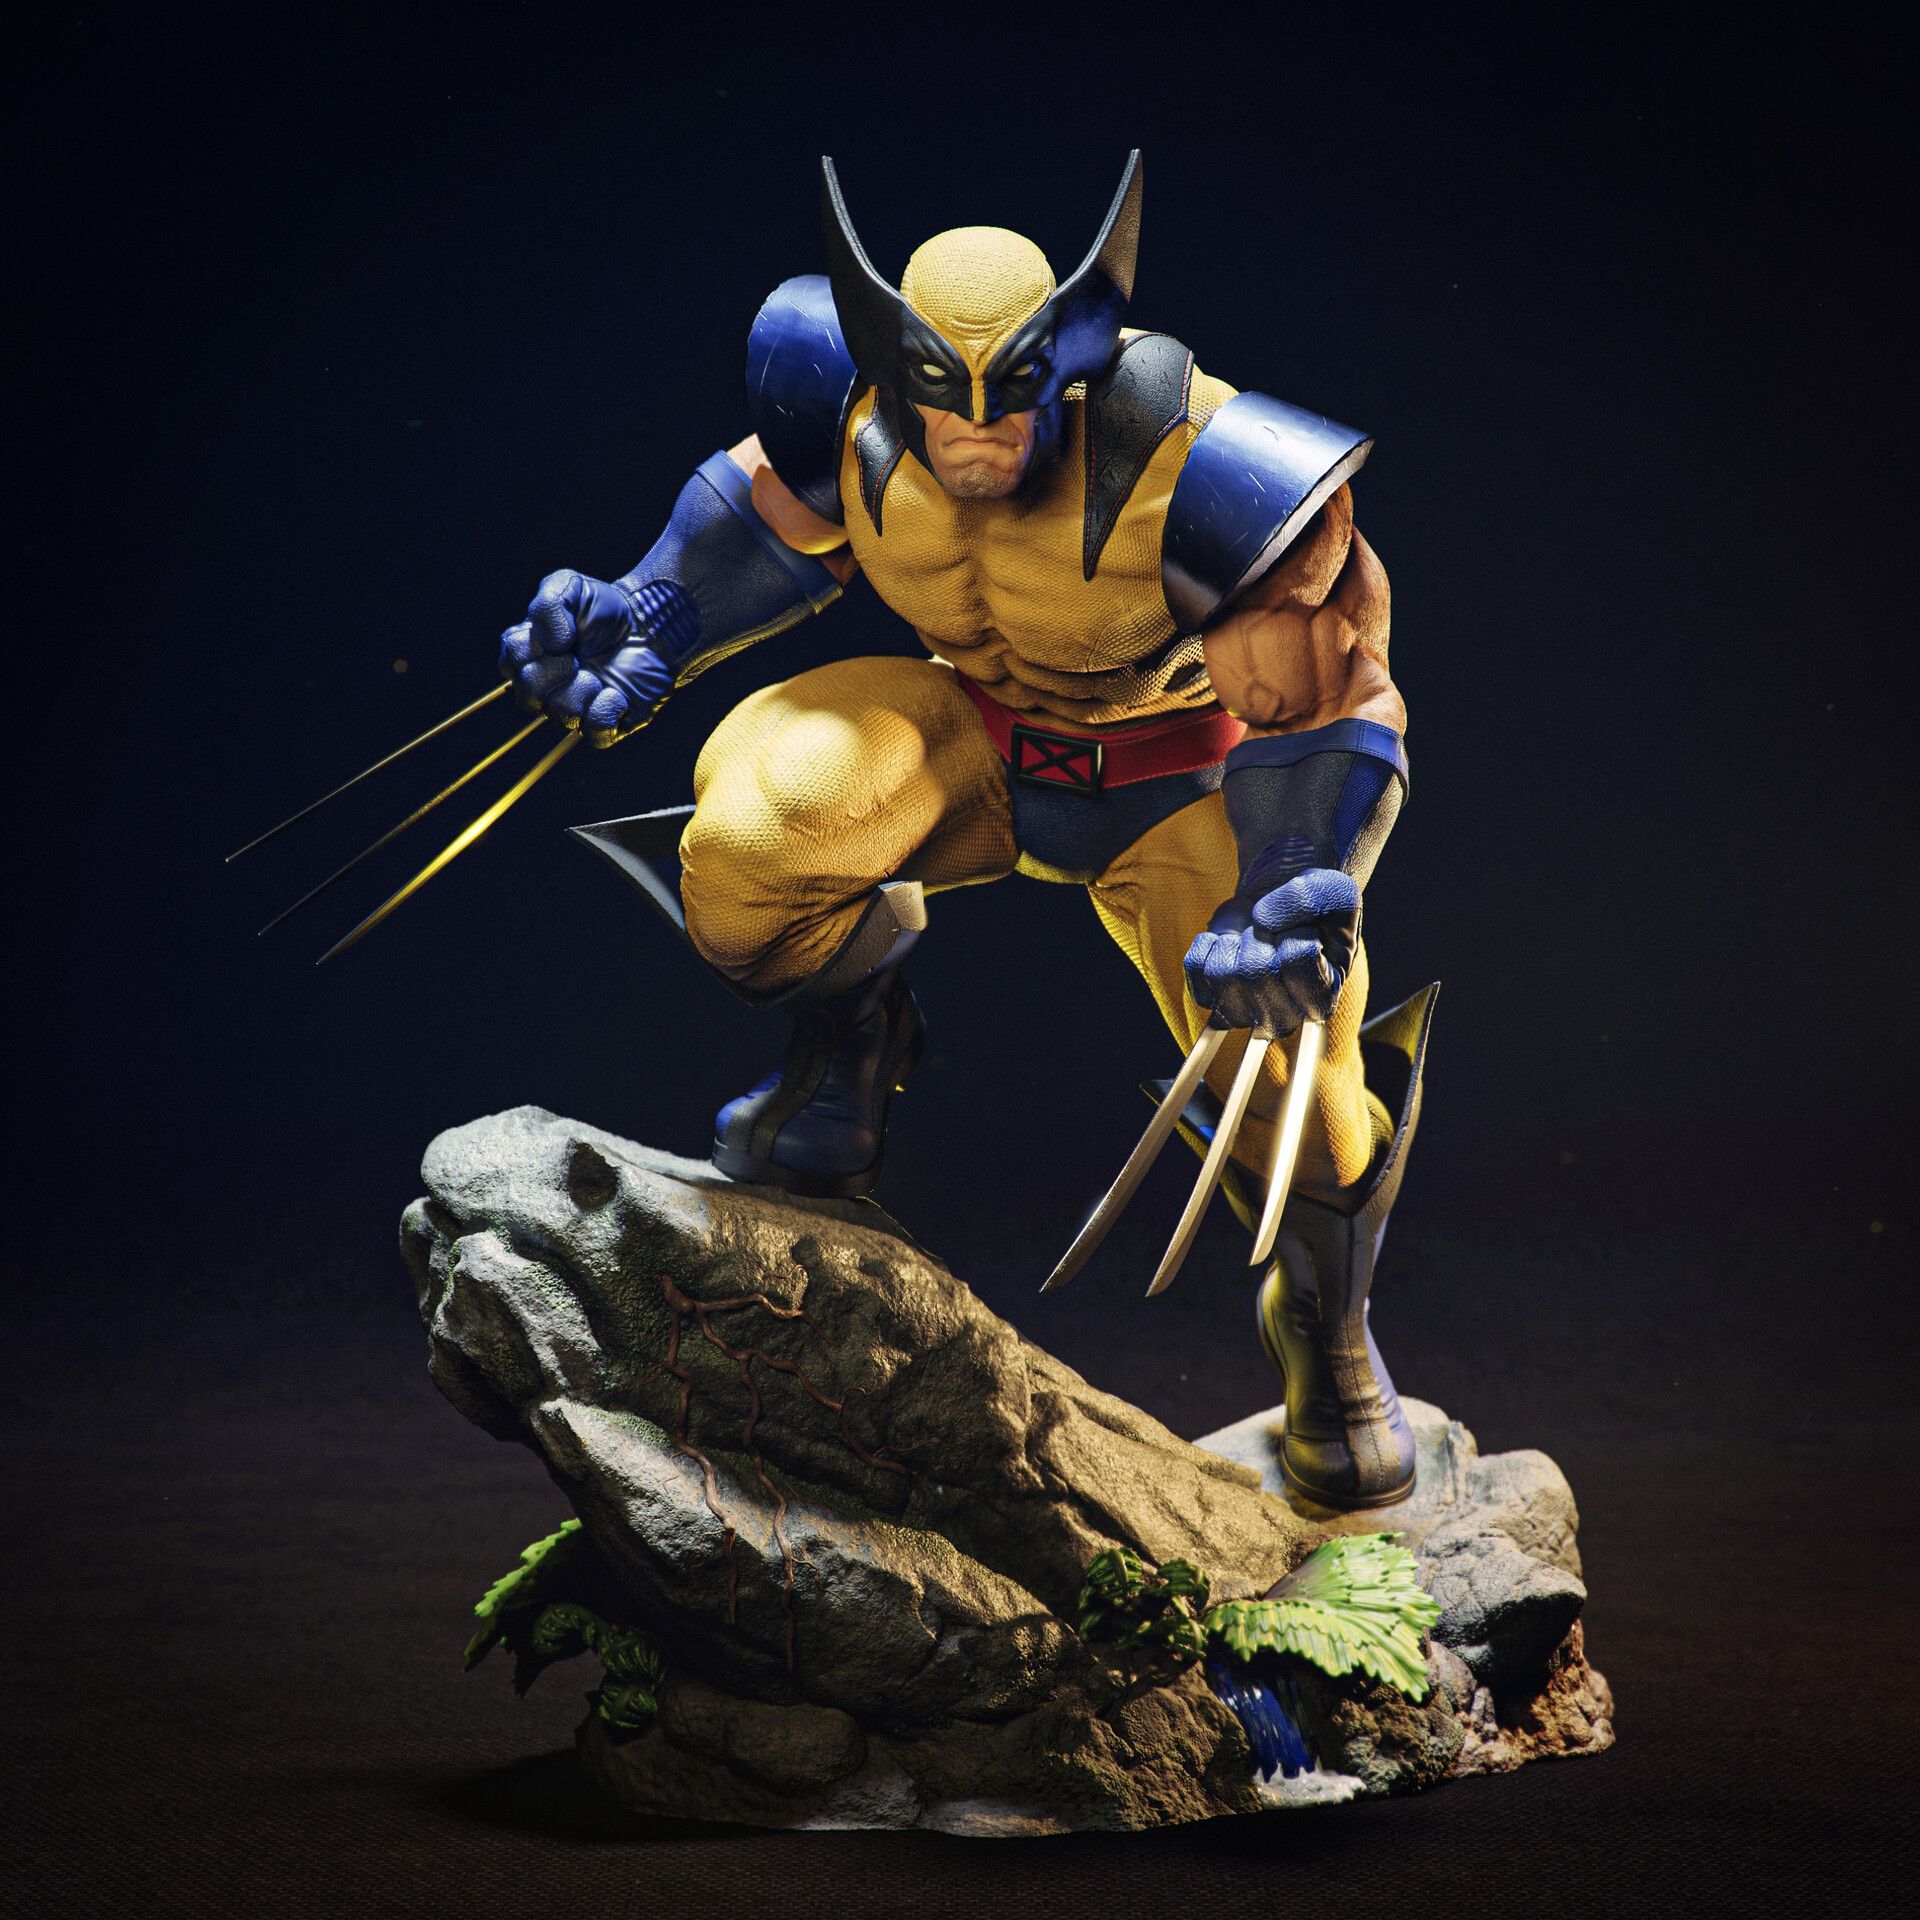 General 1920x1920 Lucas Coelho artwork X-Men Wolverine superhero Marvel Comics